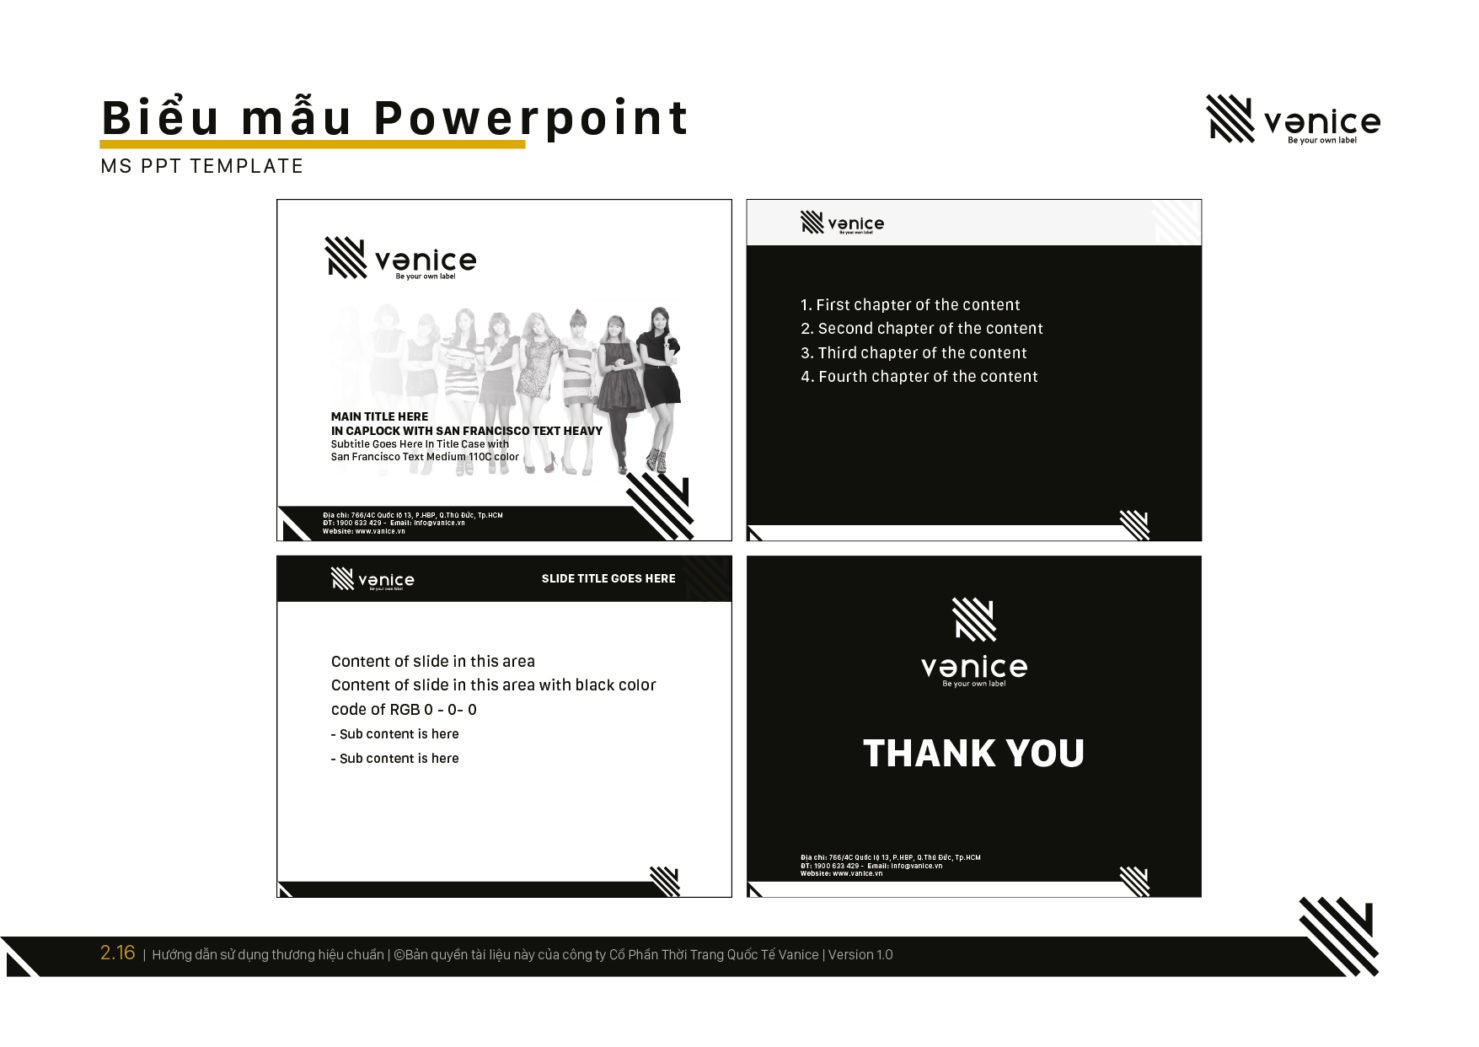 thiết kế biểu mẫu, thiết kế powerpoint, powerpoint template, thương hiệu vanice, logo vanice, thời trang vanice